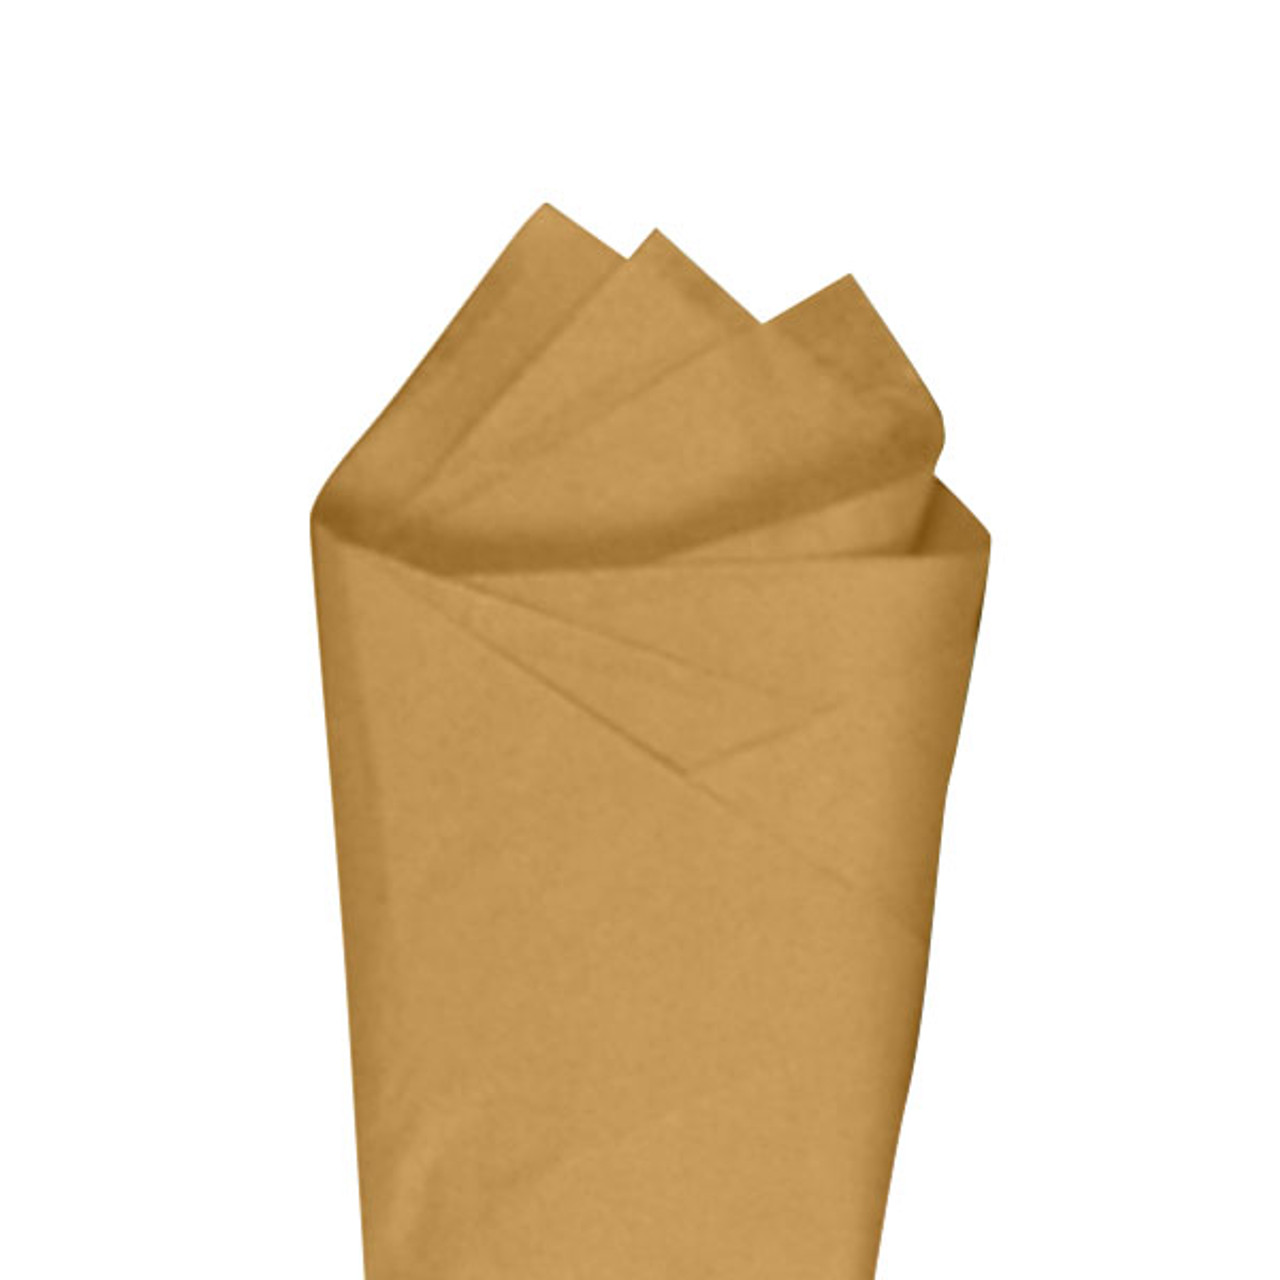 Sandstone (Orange) Color Tissue Paper 20 x 30 480 Sheets / Ream